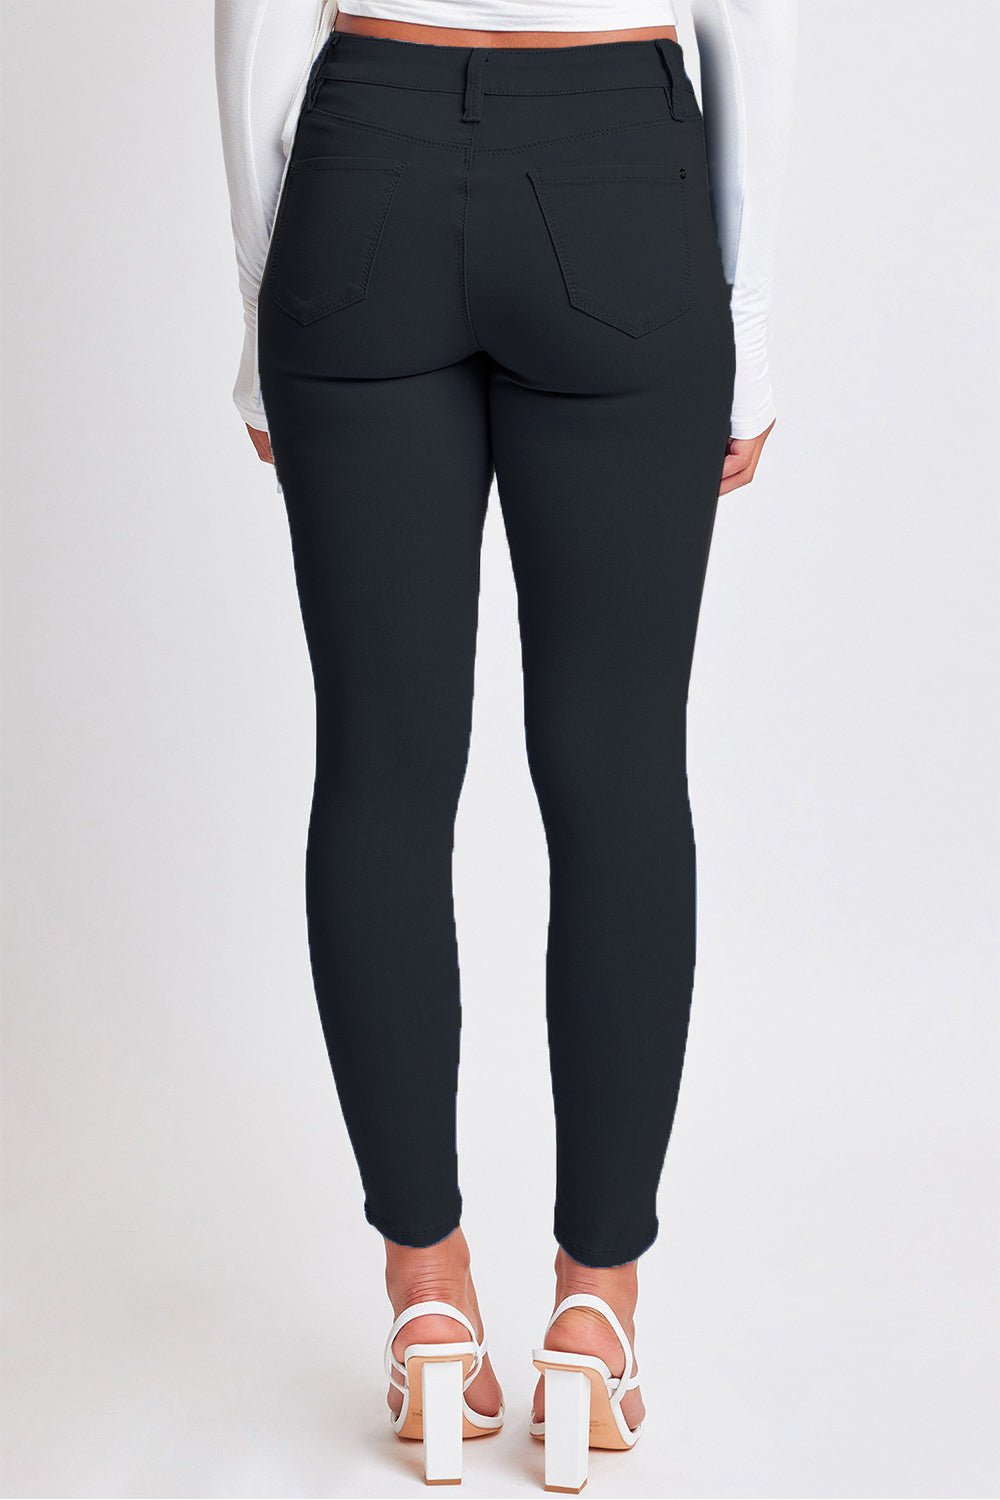 Hyperstretch Mid-Rise Skinny Pants in BlackPantsYMI Jeanswear